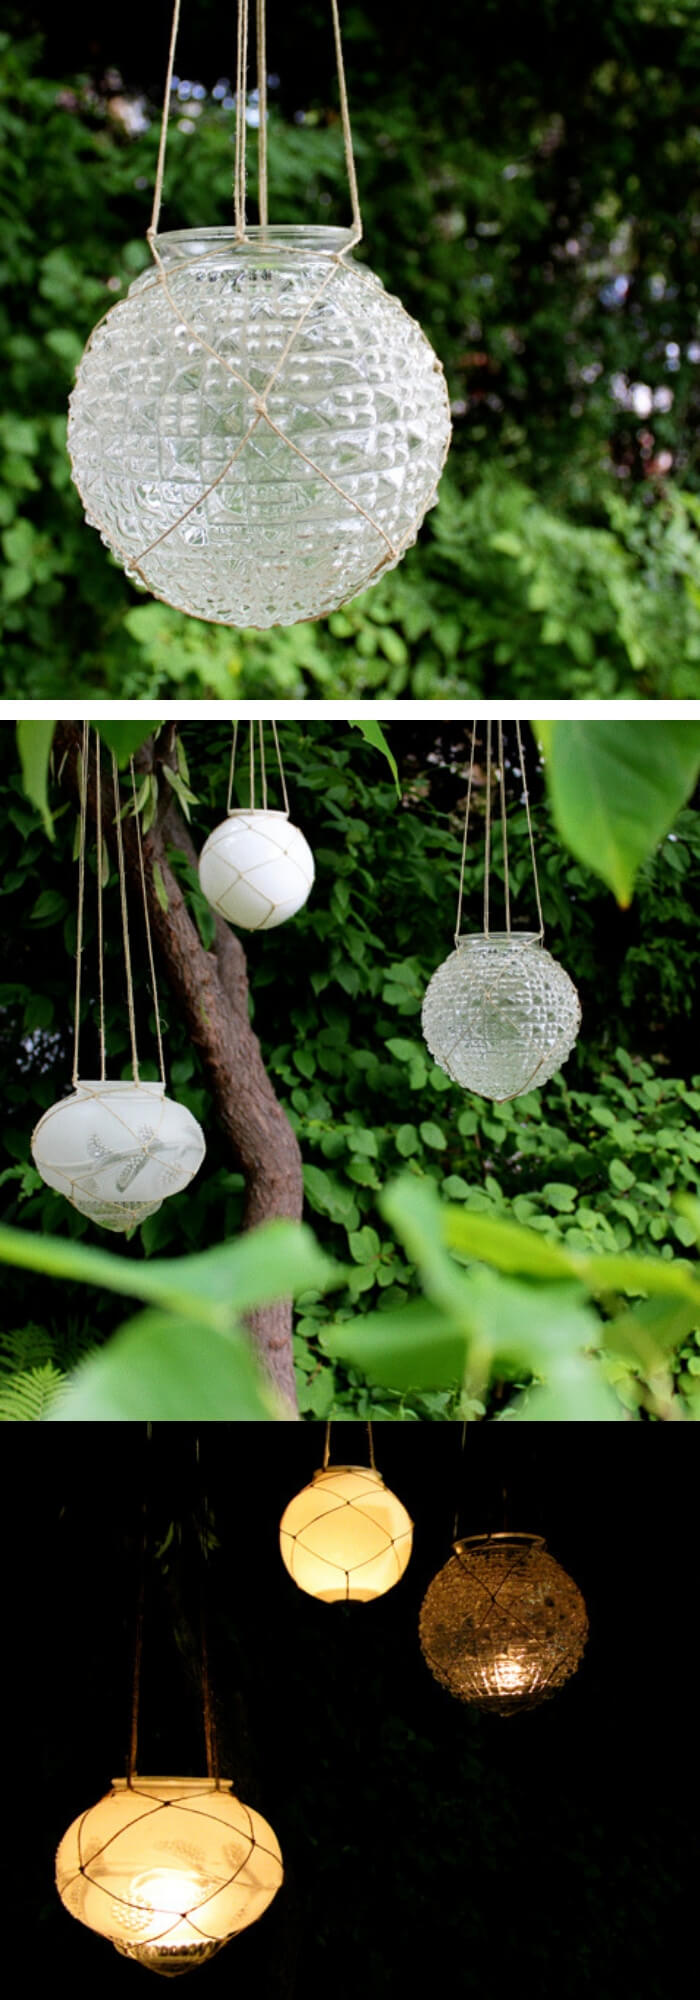 Garden Lighting: upcycled candle lanterns | Best DIY Repurposed Garden Tools Ideas | Garden Craft Ideas